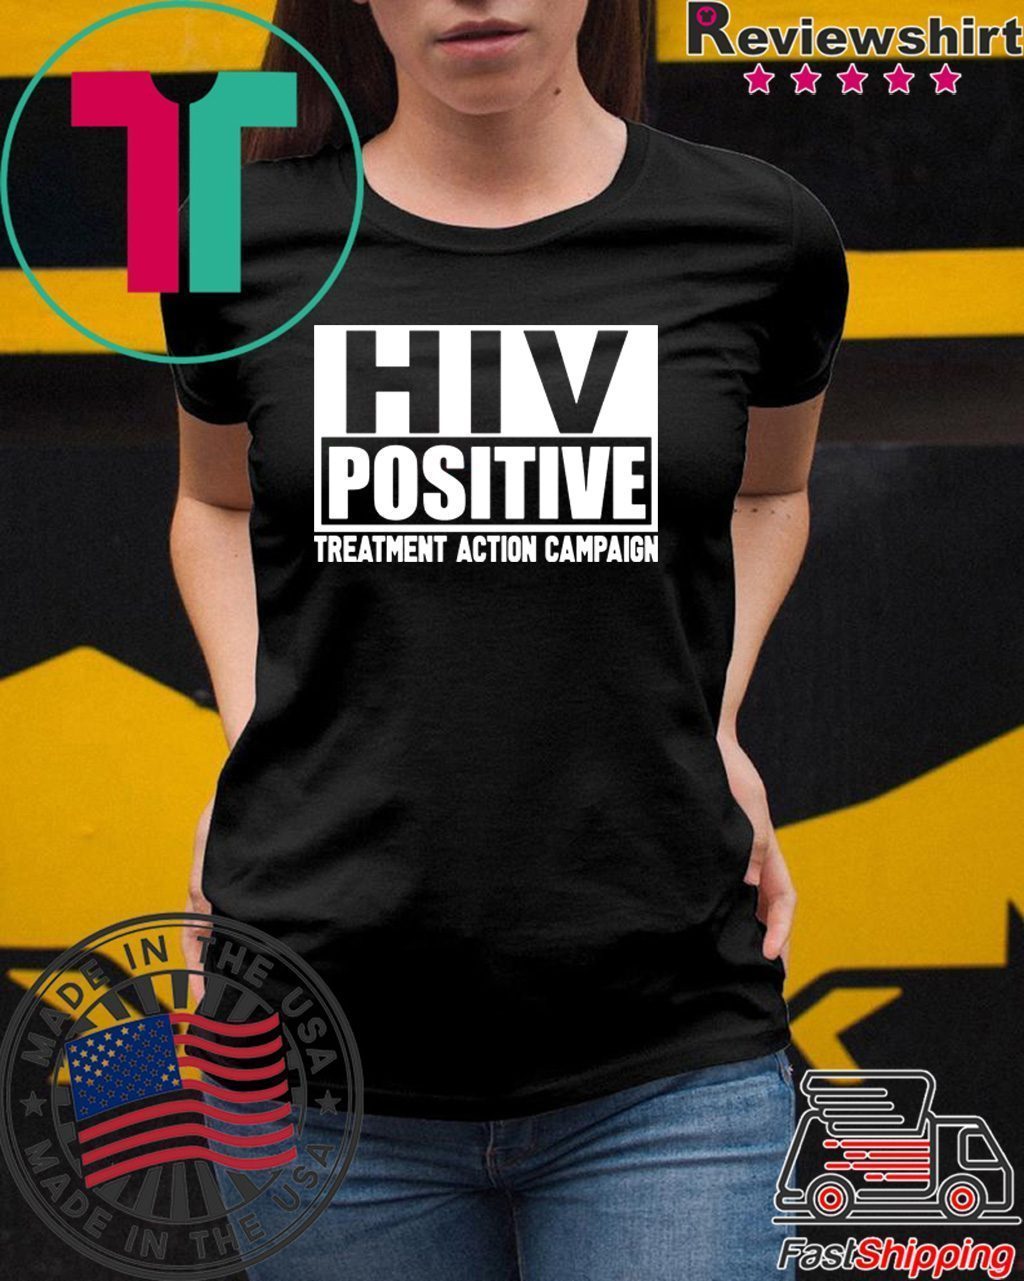 HIV Positive treatment action campaign Tee Shirt - Teeducks